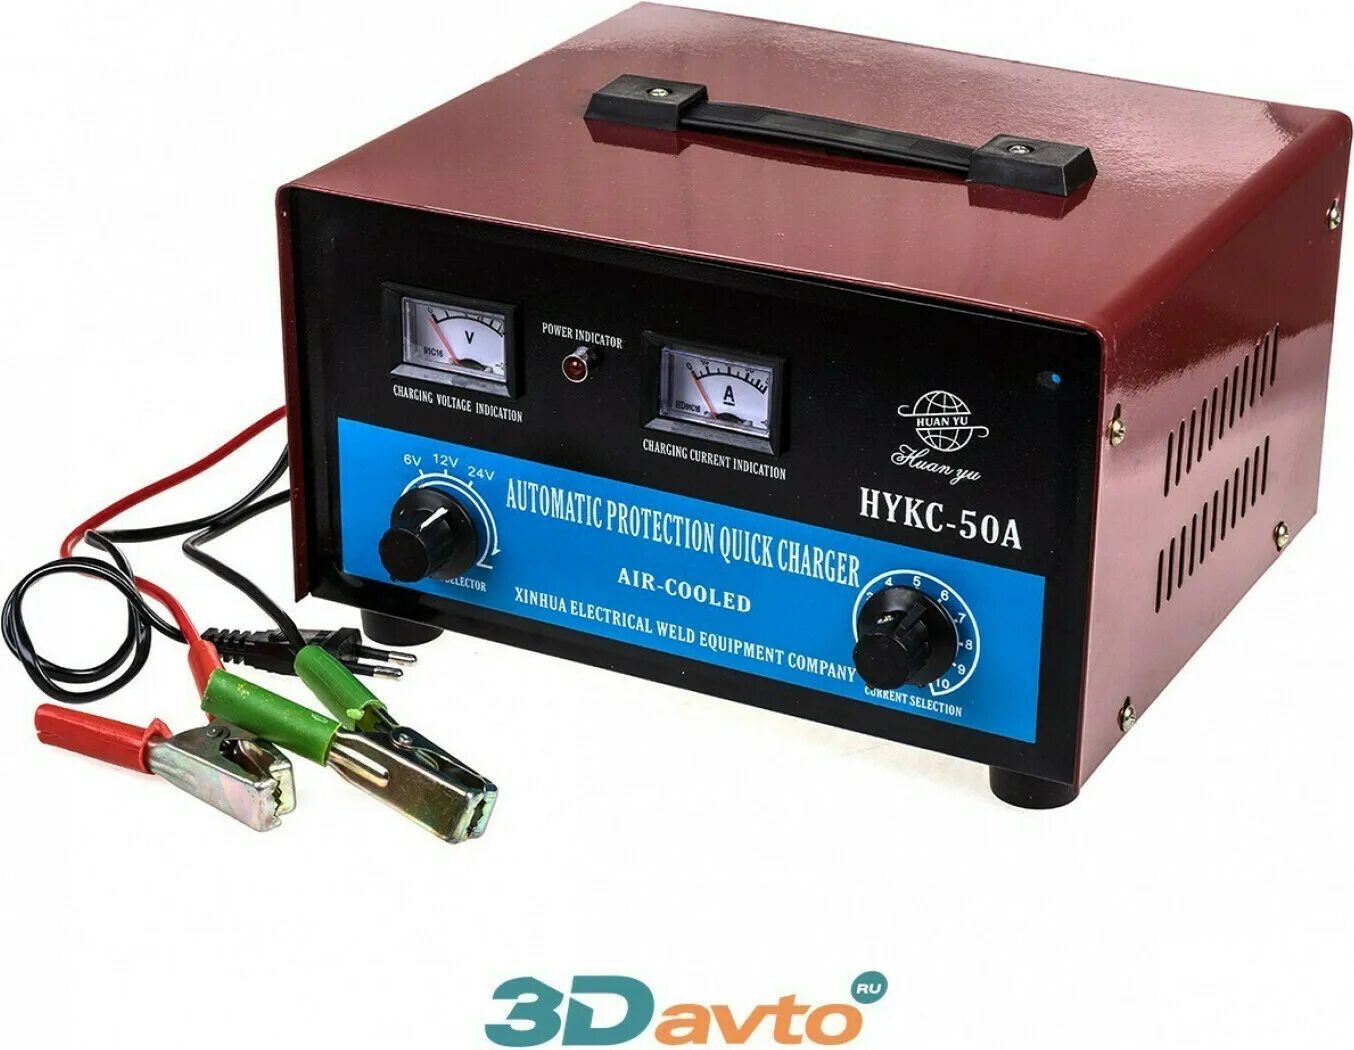 Зарядное устройство аккумулятора АВТОХИТ hykc-50a. Зарядное устройство для автомобильных аккумуляторов Huan Qiu hykc-50a. Китайское зарядное устройство для автомобильного аккумулятора 12в 24в. Зарядное устройство Style hykc -50a.